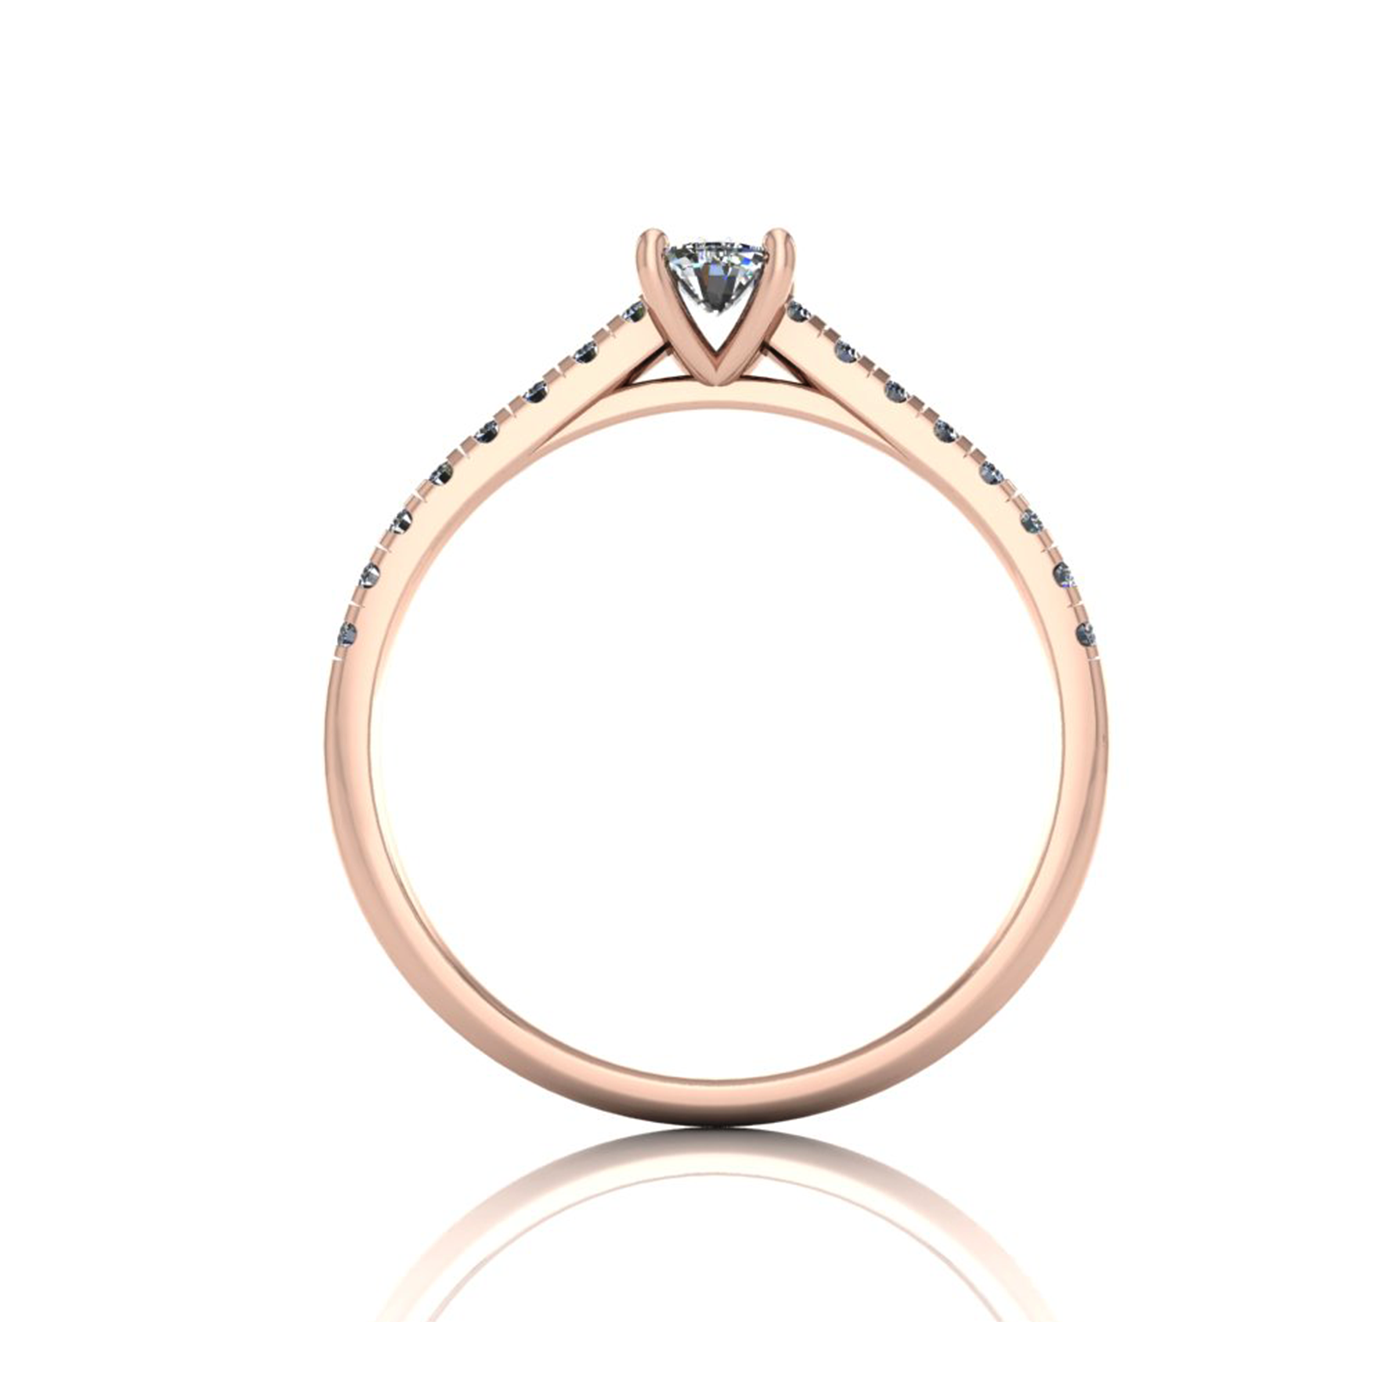 18k rose gold  4 prongs elongated cushion cut diamond engagement ring with whisper thin pavÉ set band